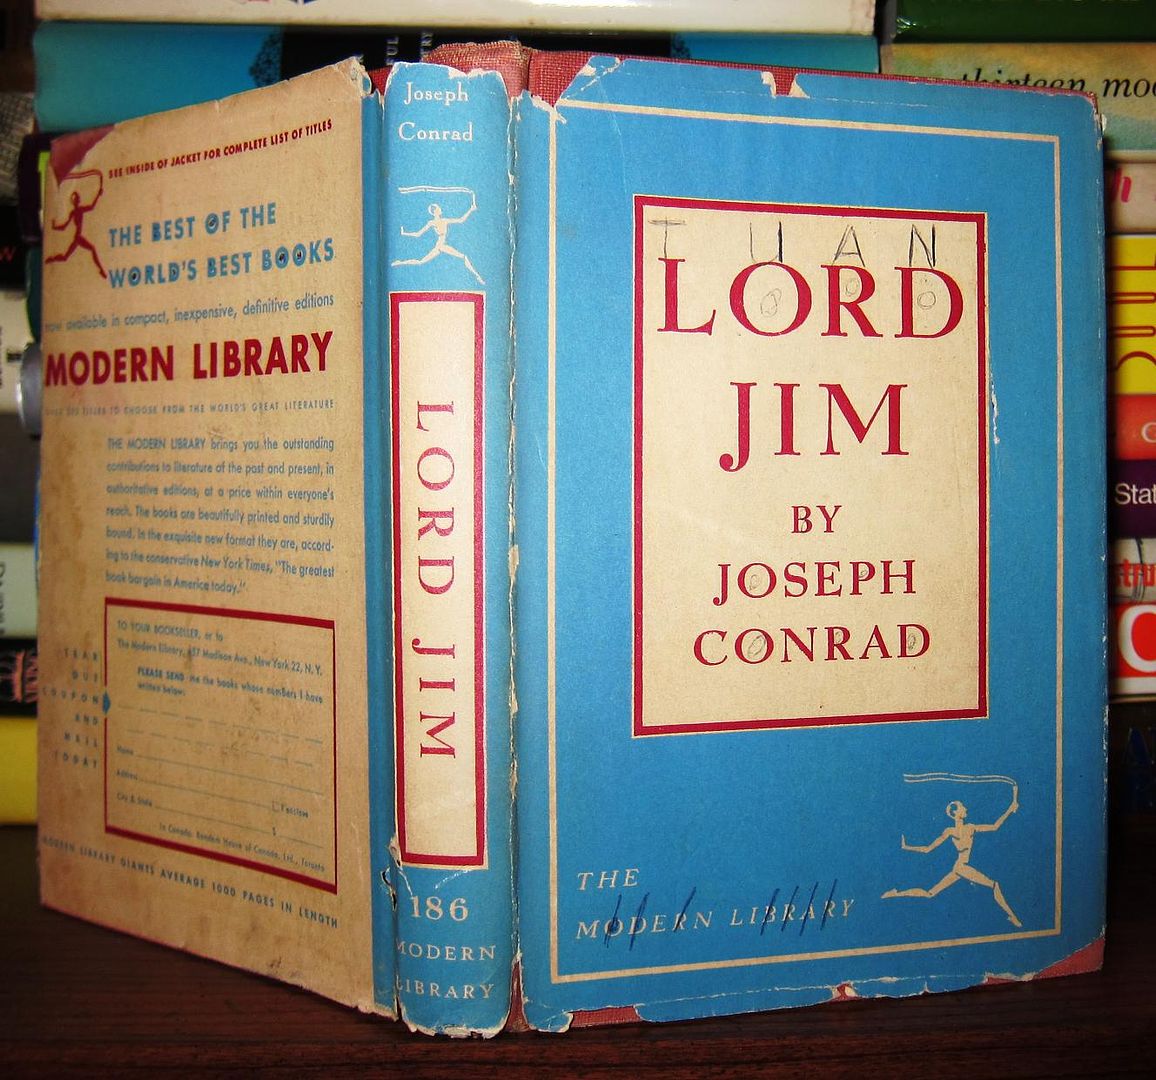 JOSEPH CONRAD - Lord Jim